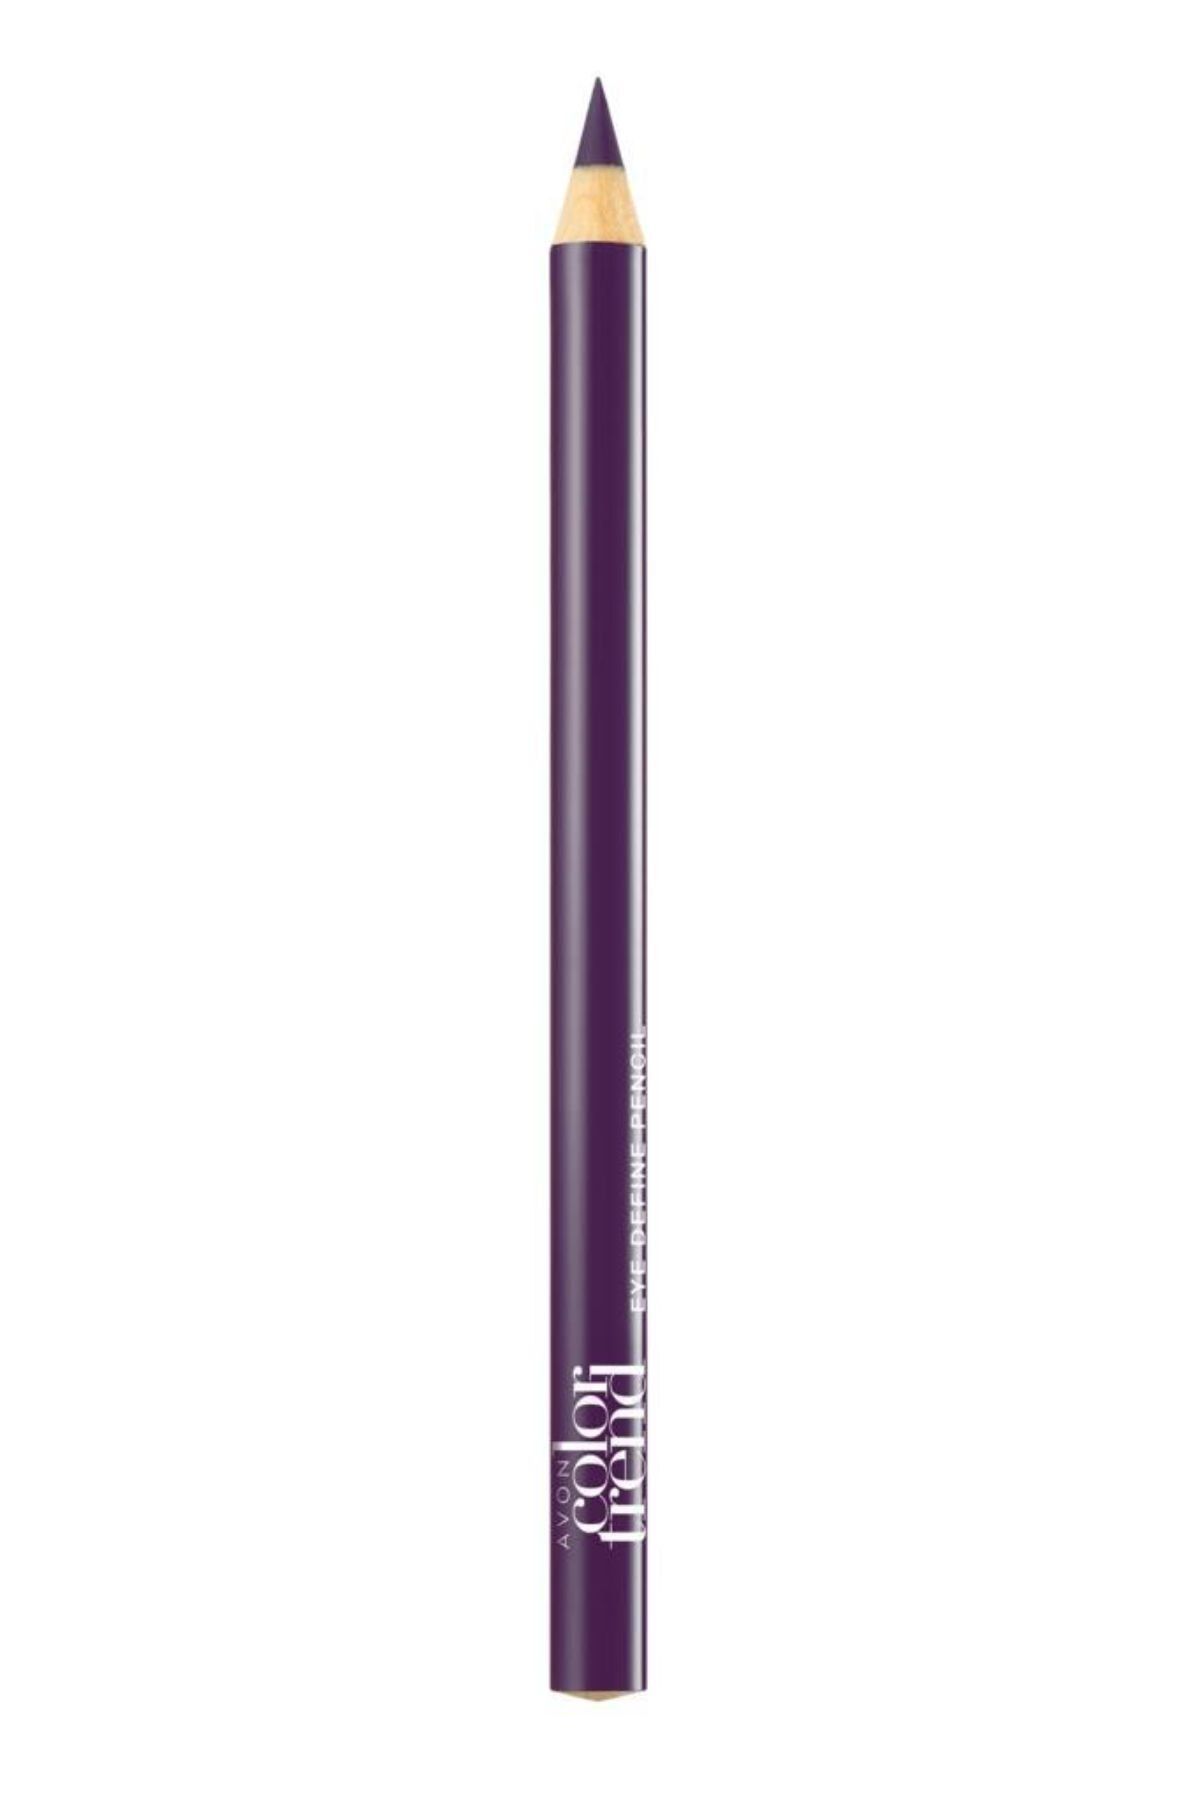 Avon Color Trend Mor Göz Kalemi - Violet 8681298935216